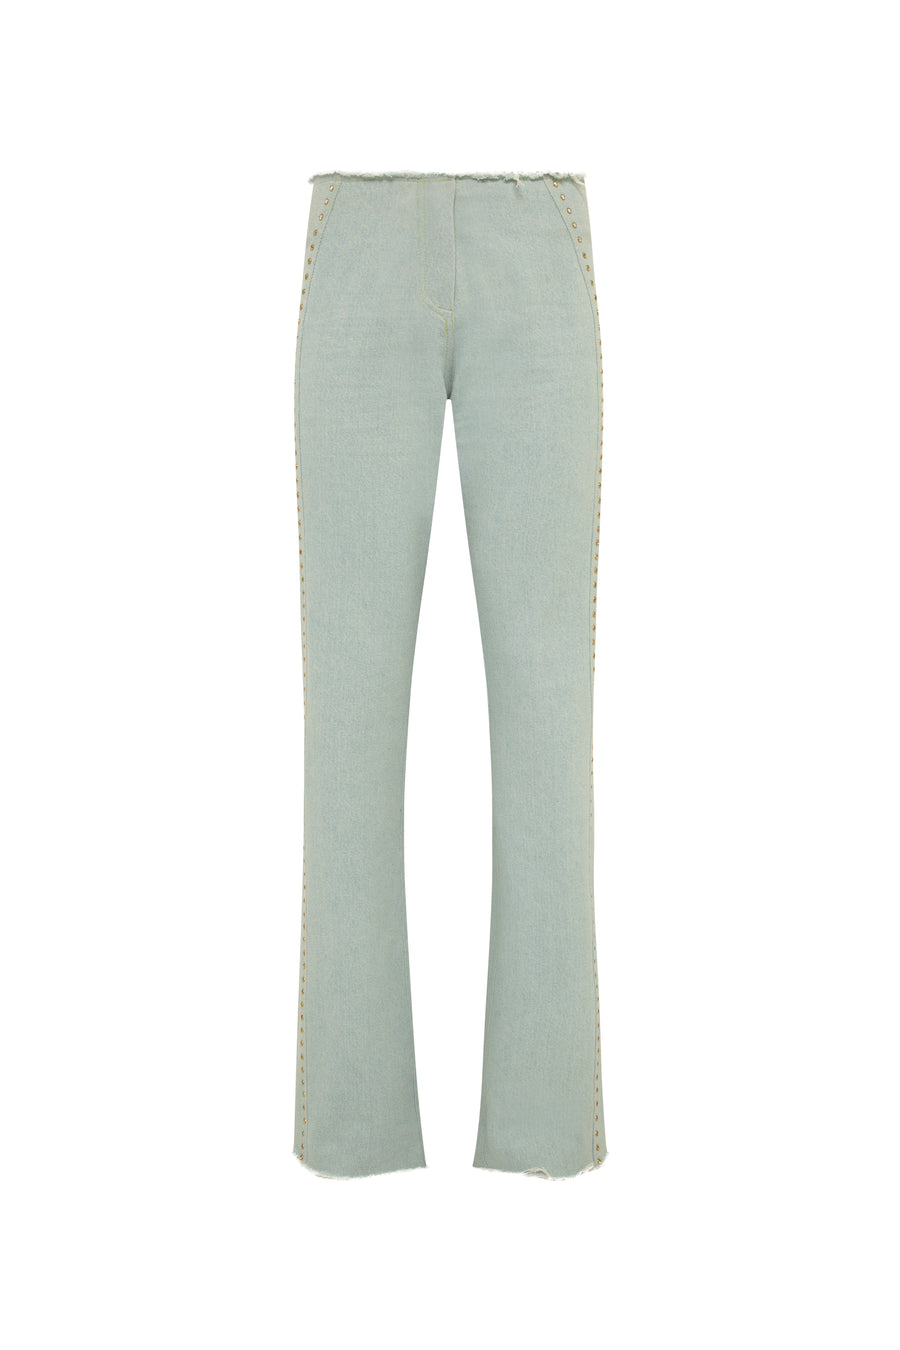 GINY - Crystal embellished wide-leg jeans